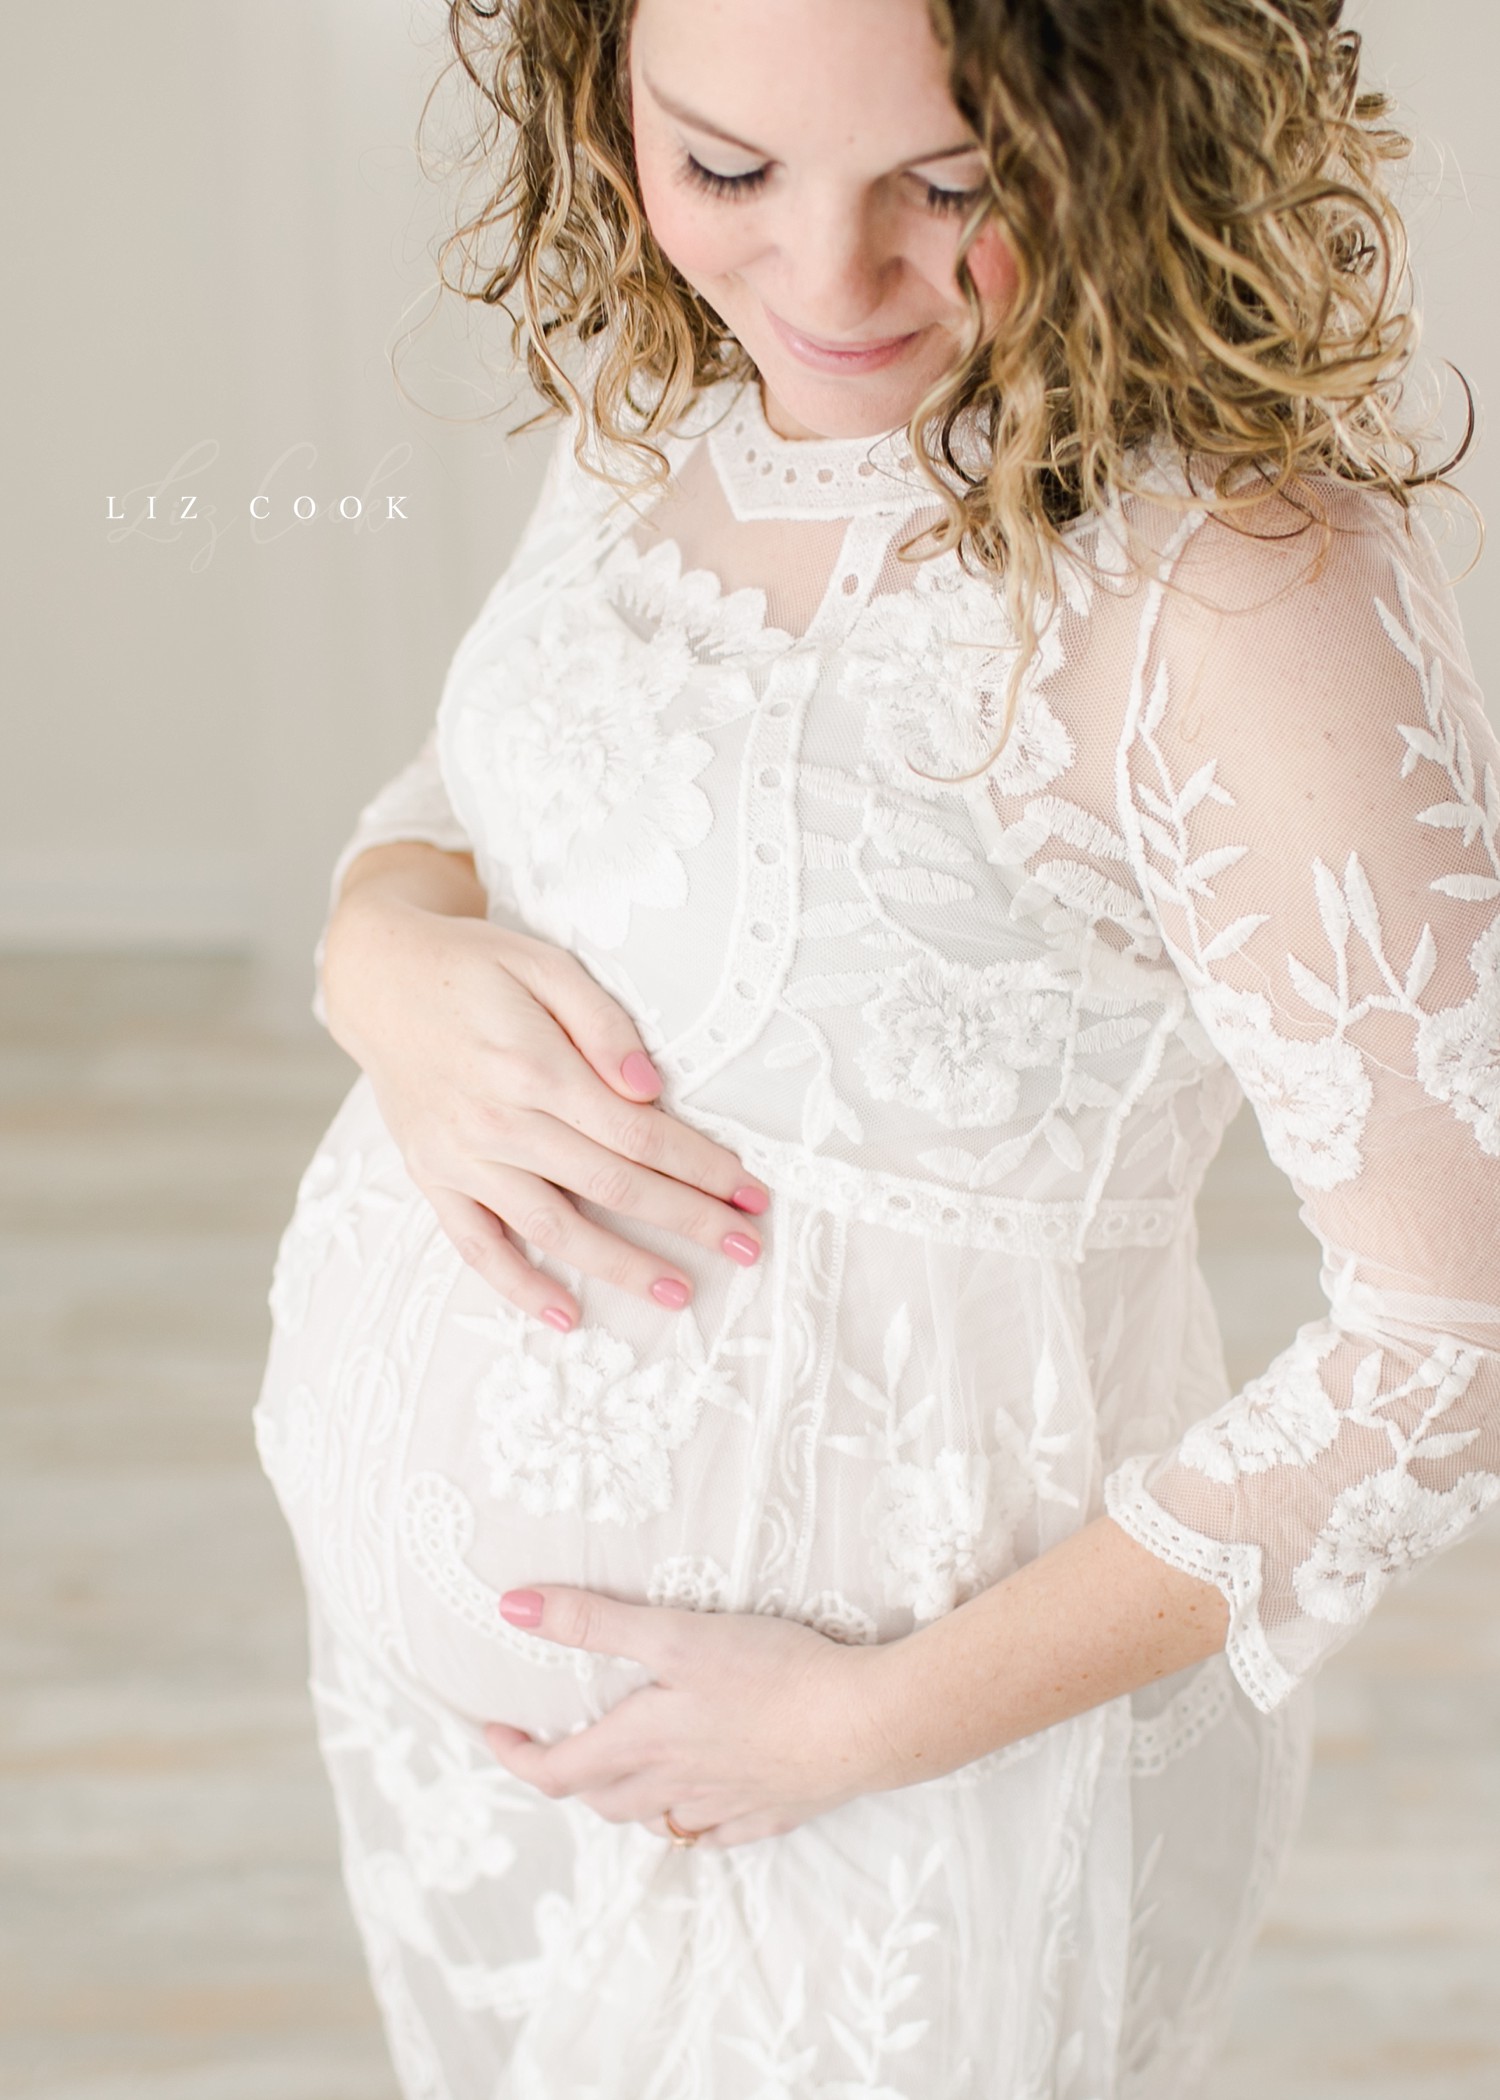 lynchburg-virginia-pregnancy-photography-studio-pictures_0011.jpg